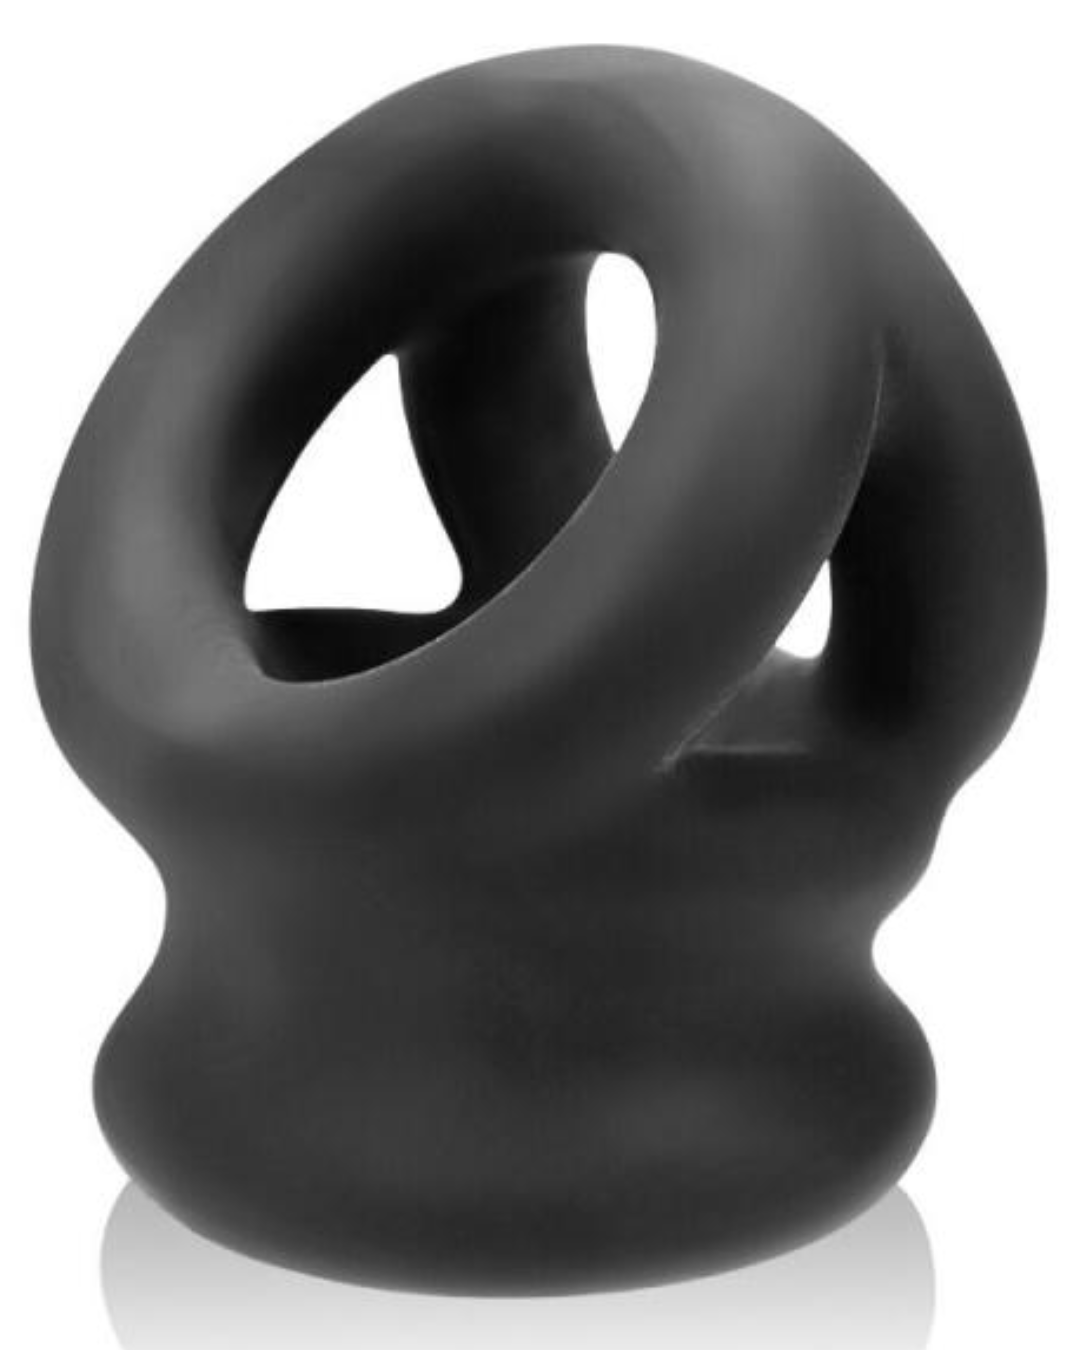 Oxballs Tri Squeeze Cocksling Ball Stretcher - Black